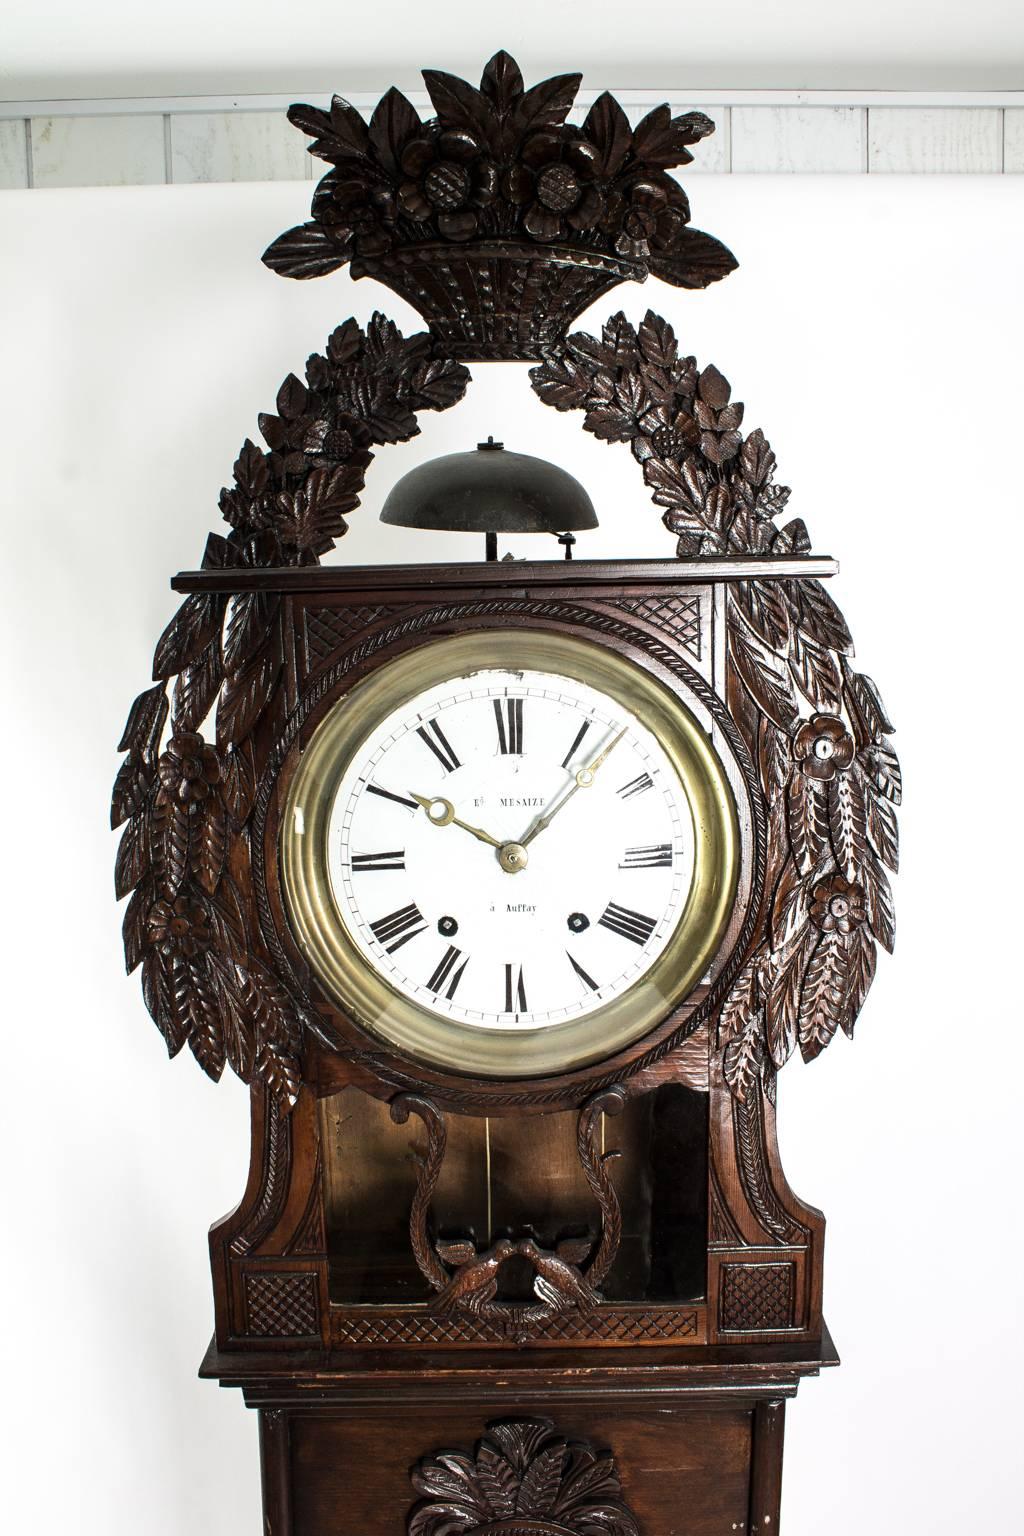 19th century clocks